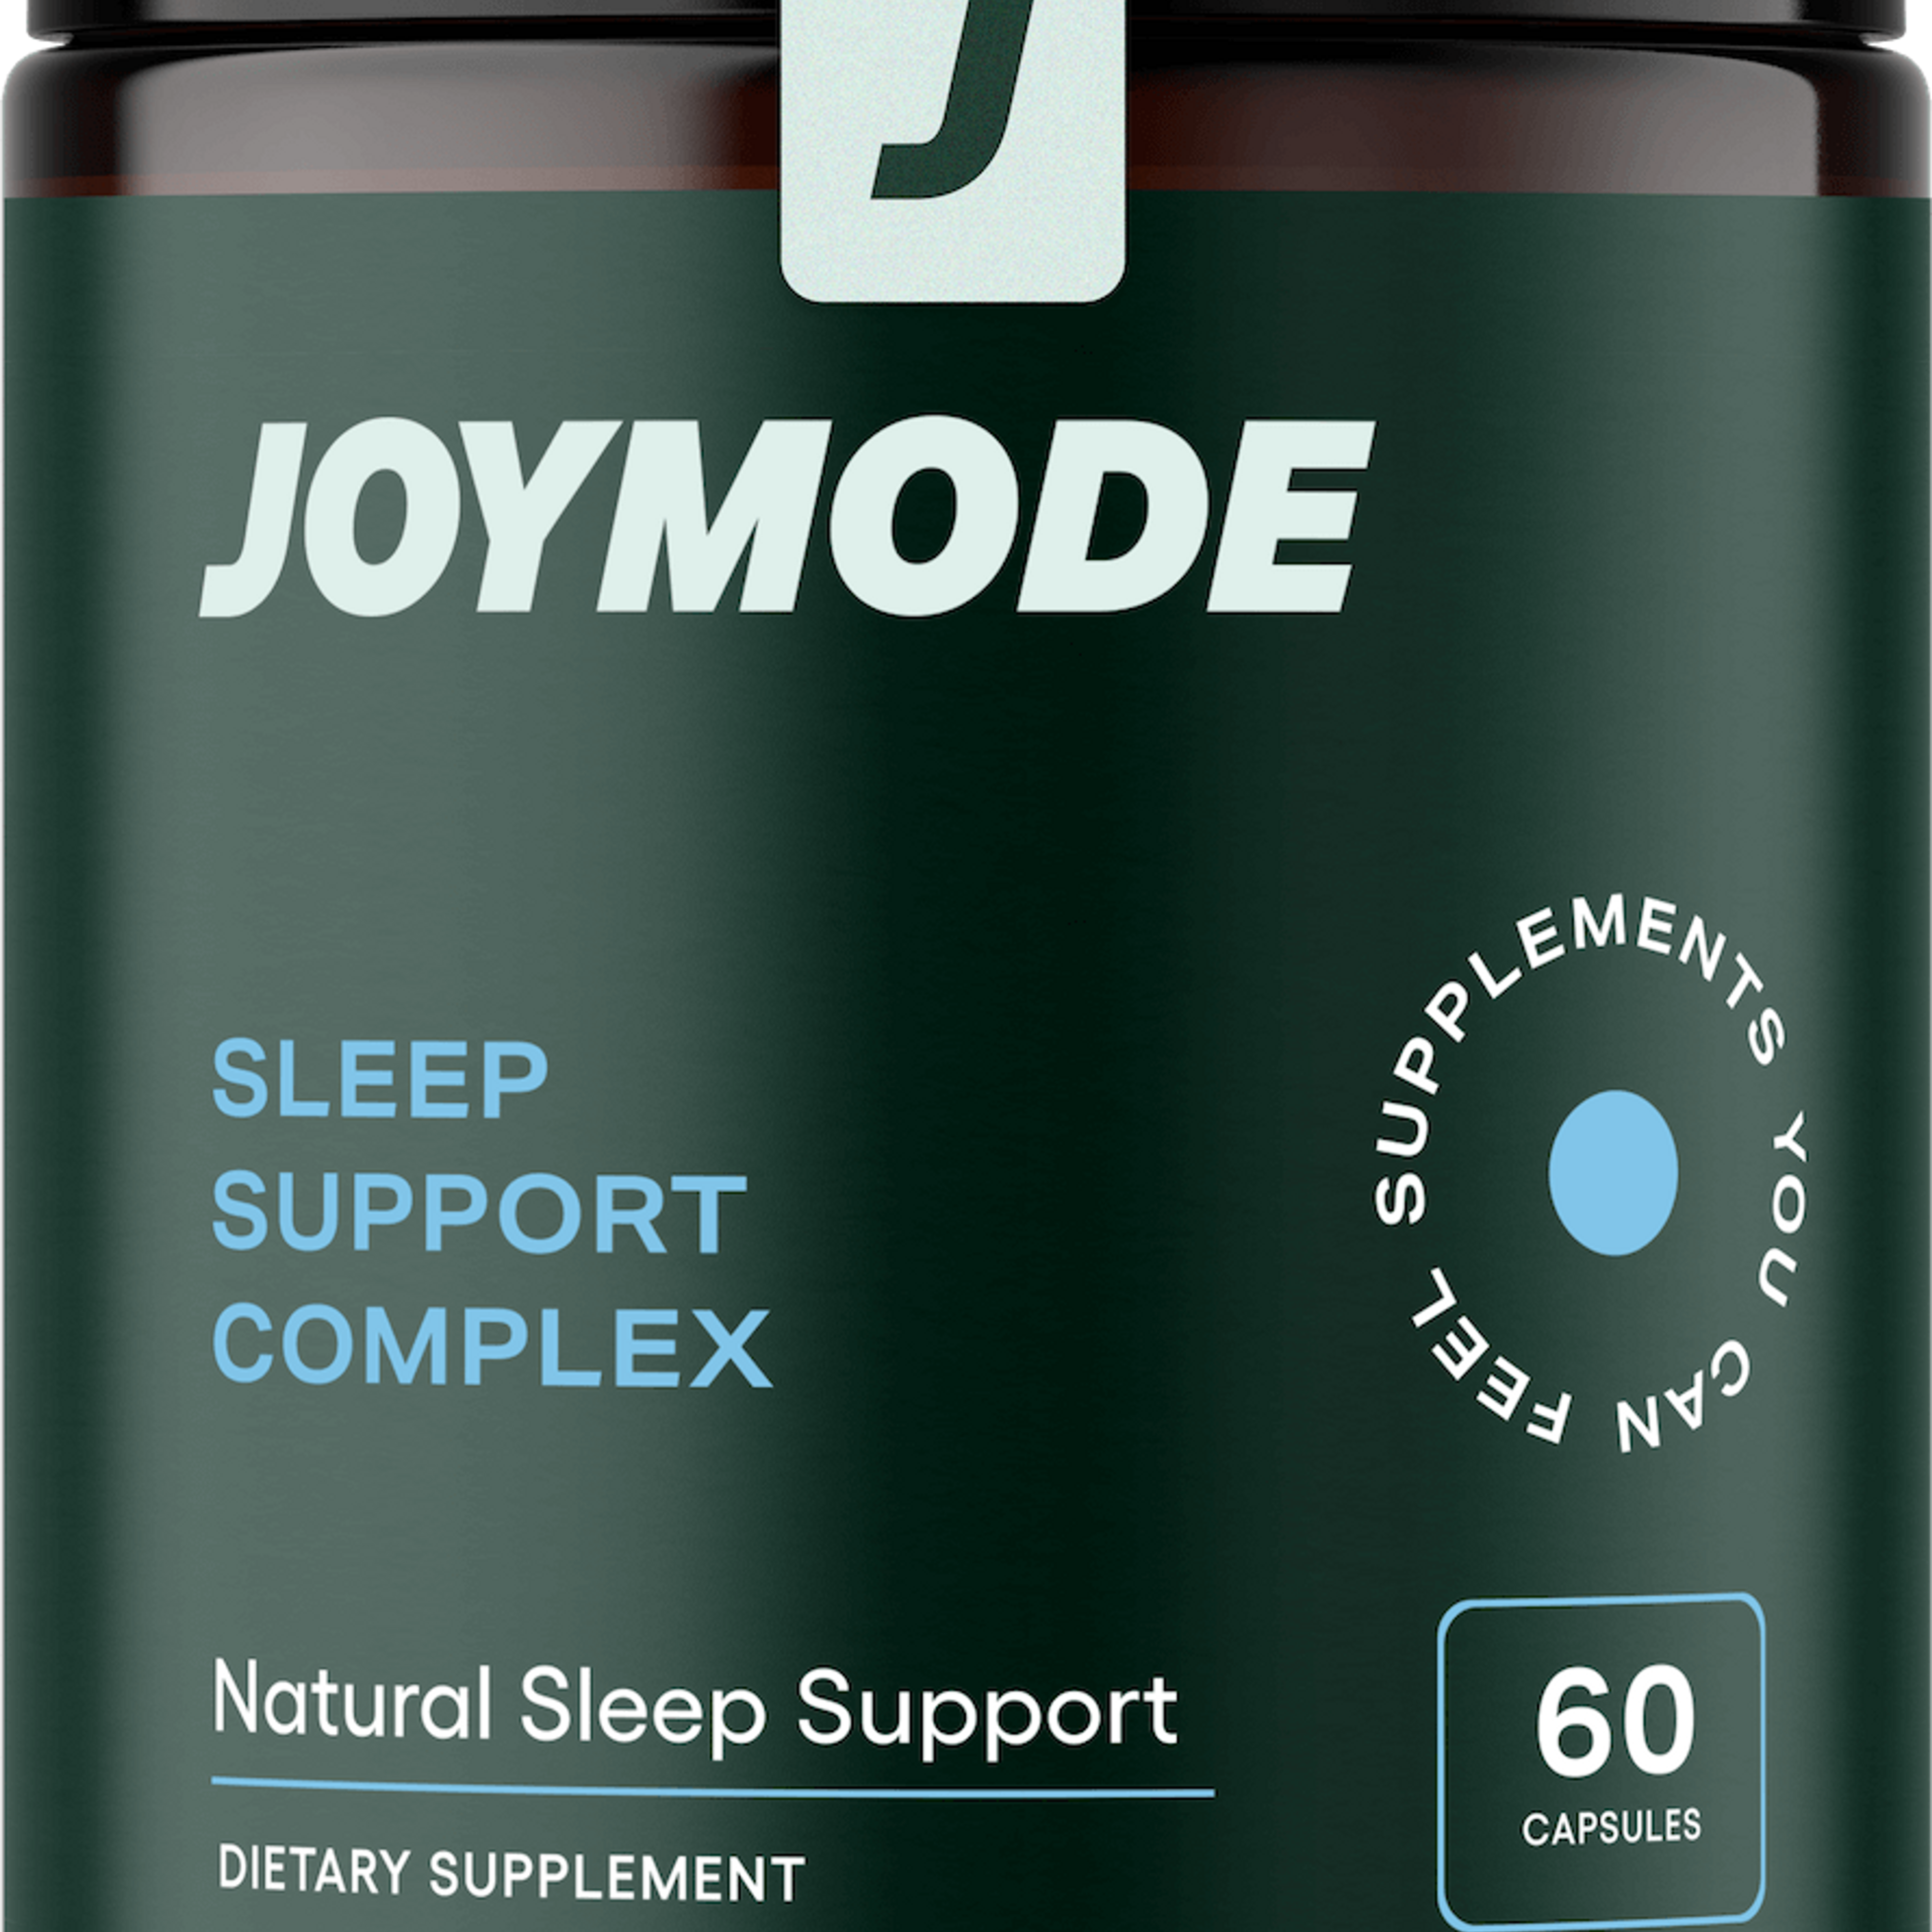 Sleep Support Complex